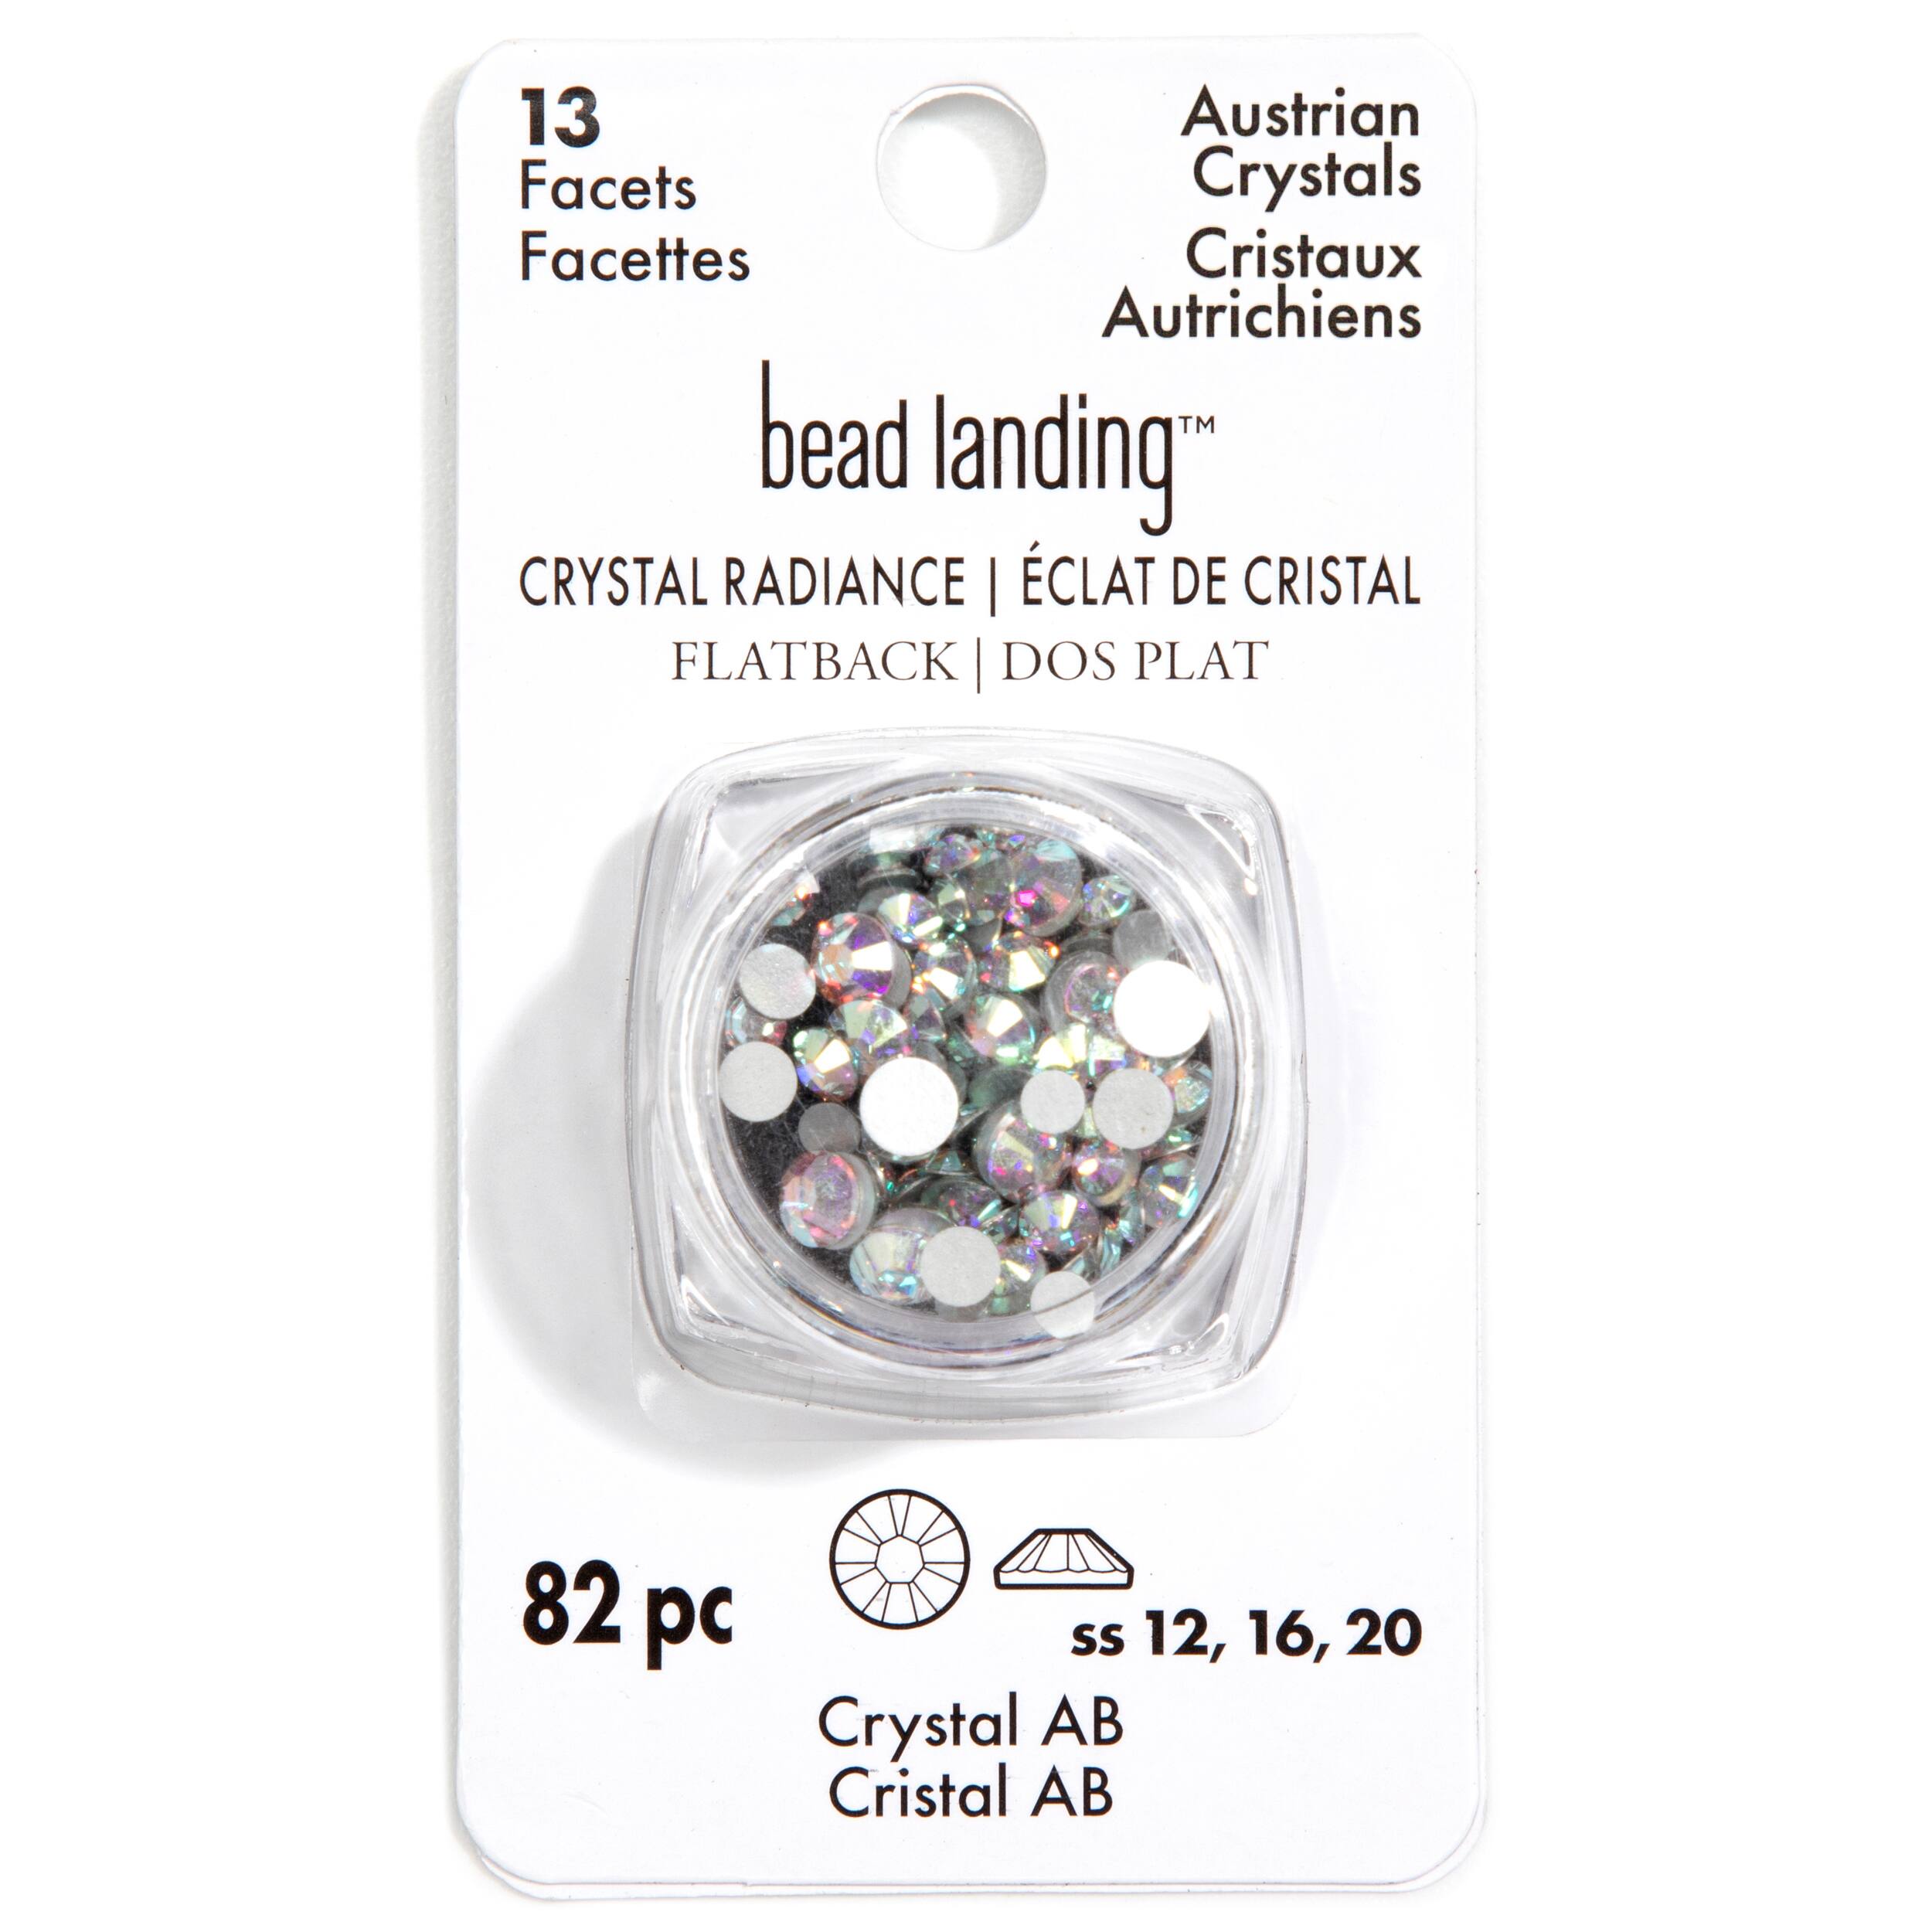 Crystal Radiance Crystal AB Mix Flatback Austrian Crystals by Bead Landing™